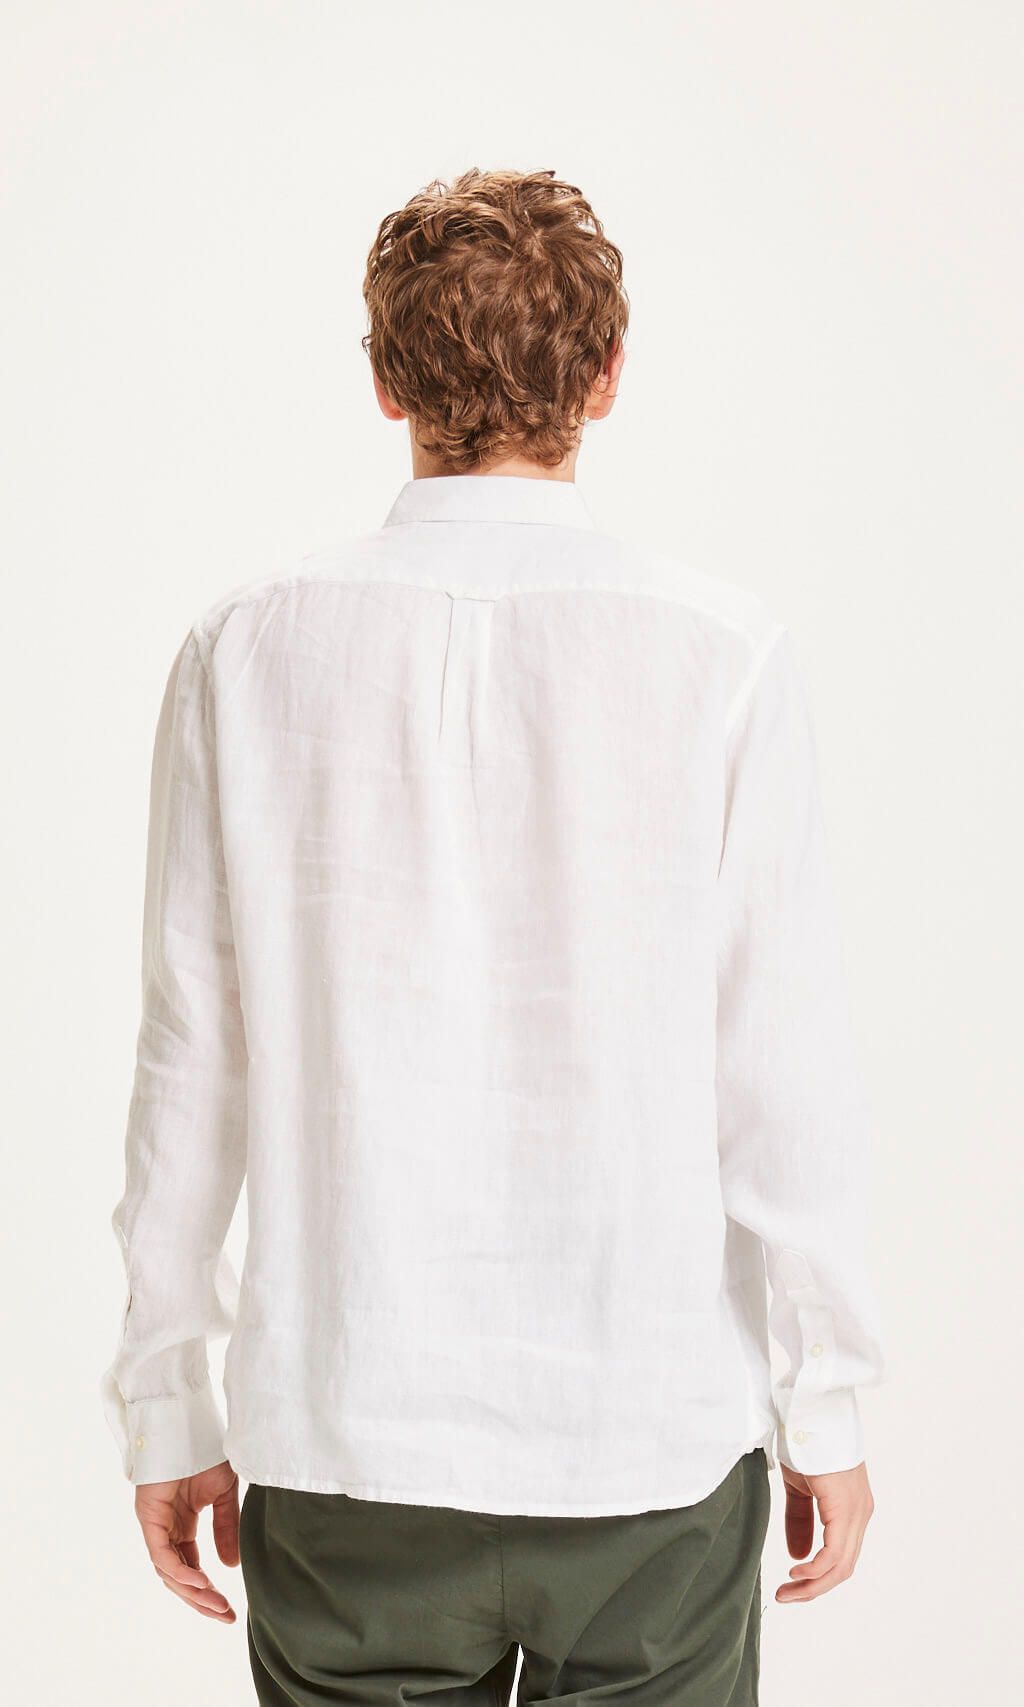 LARCH LS linen shirt - Vegan bright white L